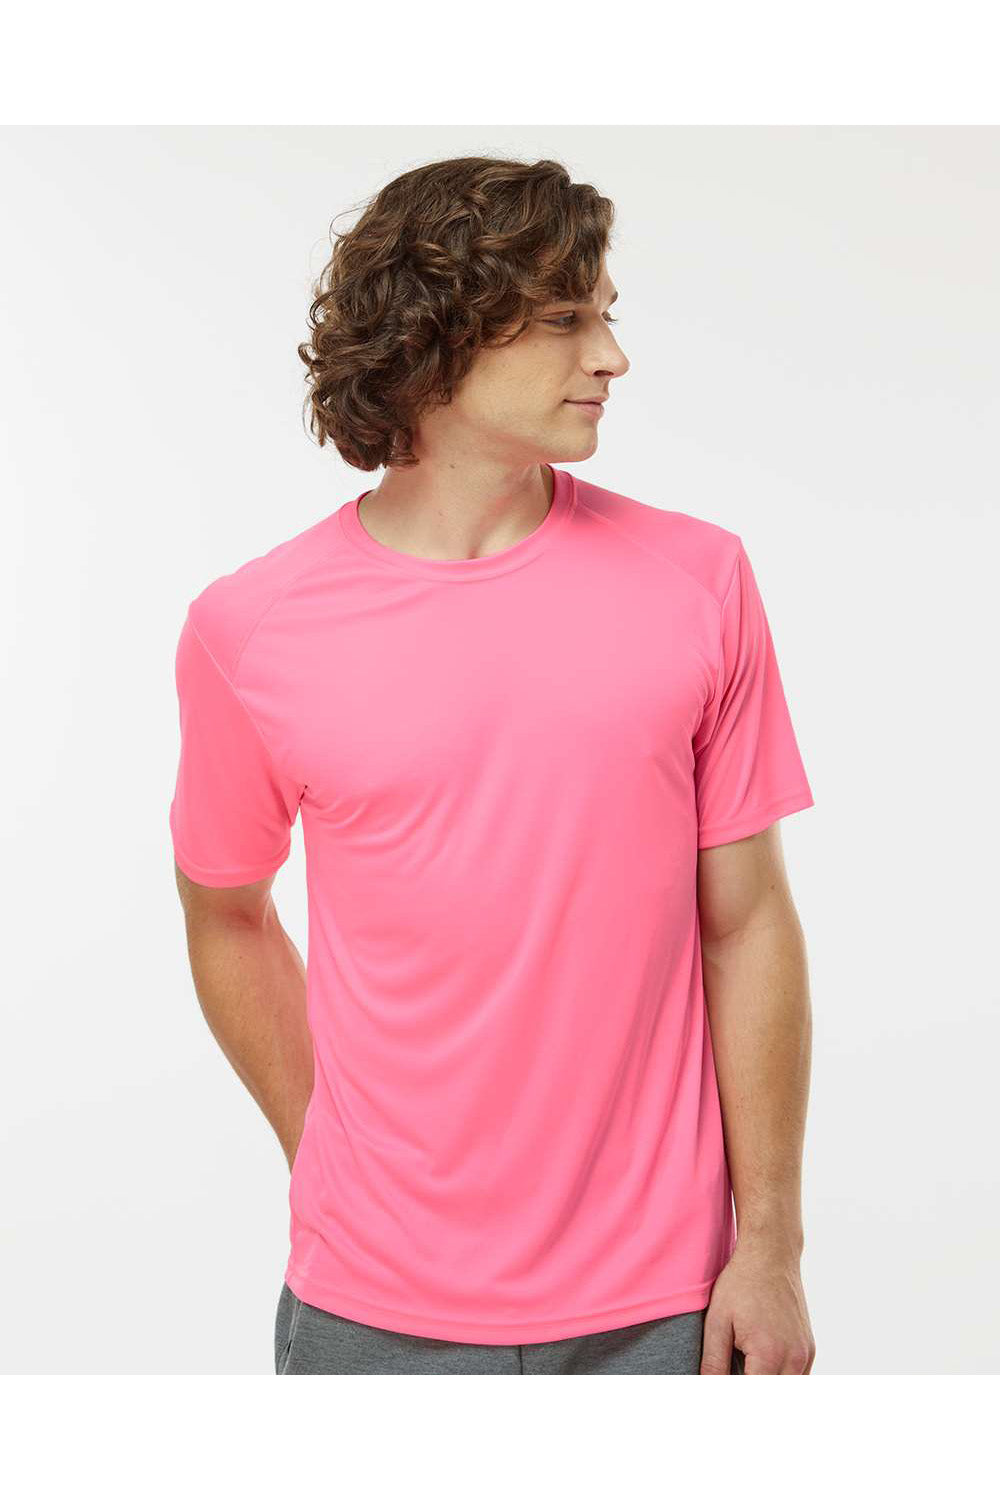 Paragon 200 Mens Islander Performance Short Sleeve Crewneck T-Shirt Neon Pink Model Front